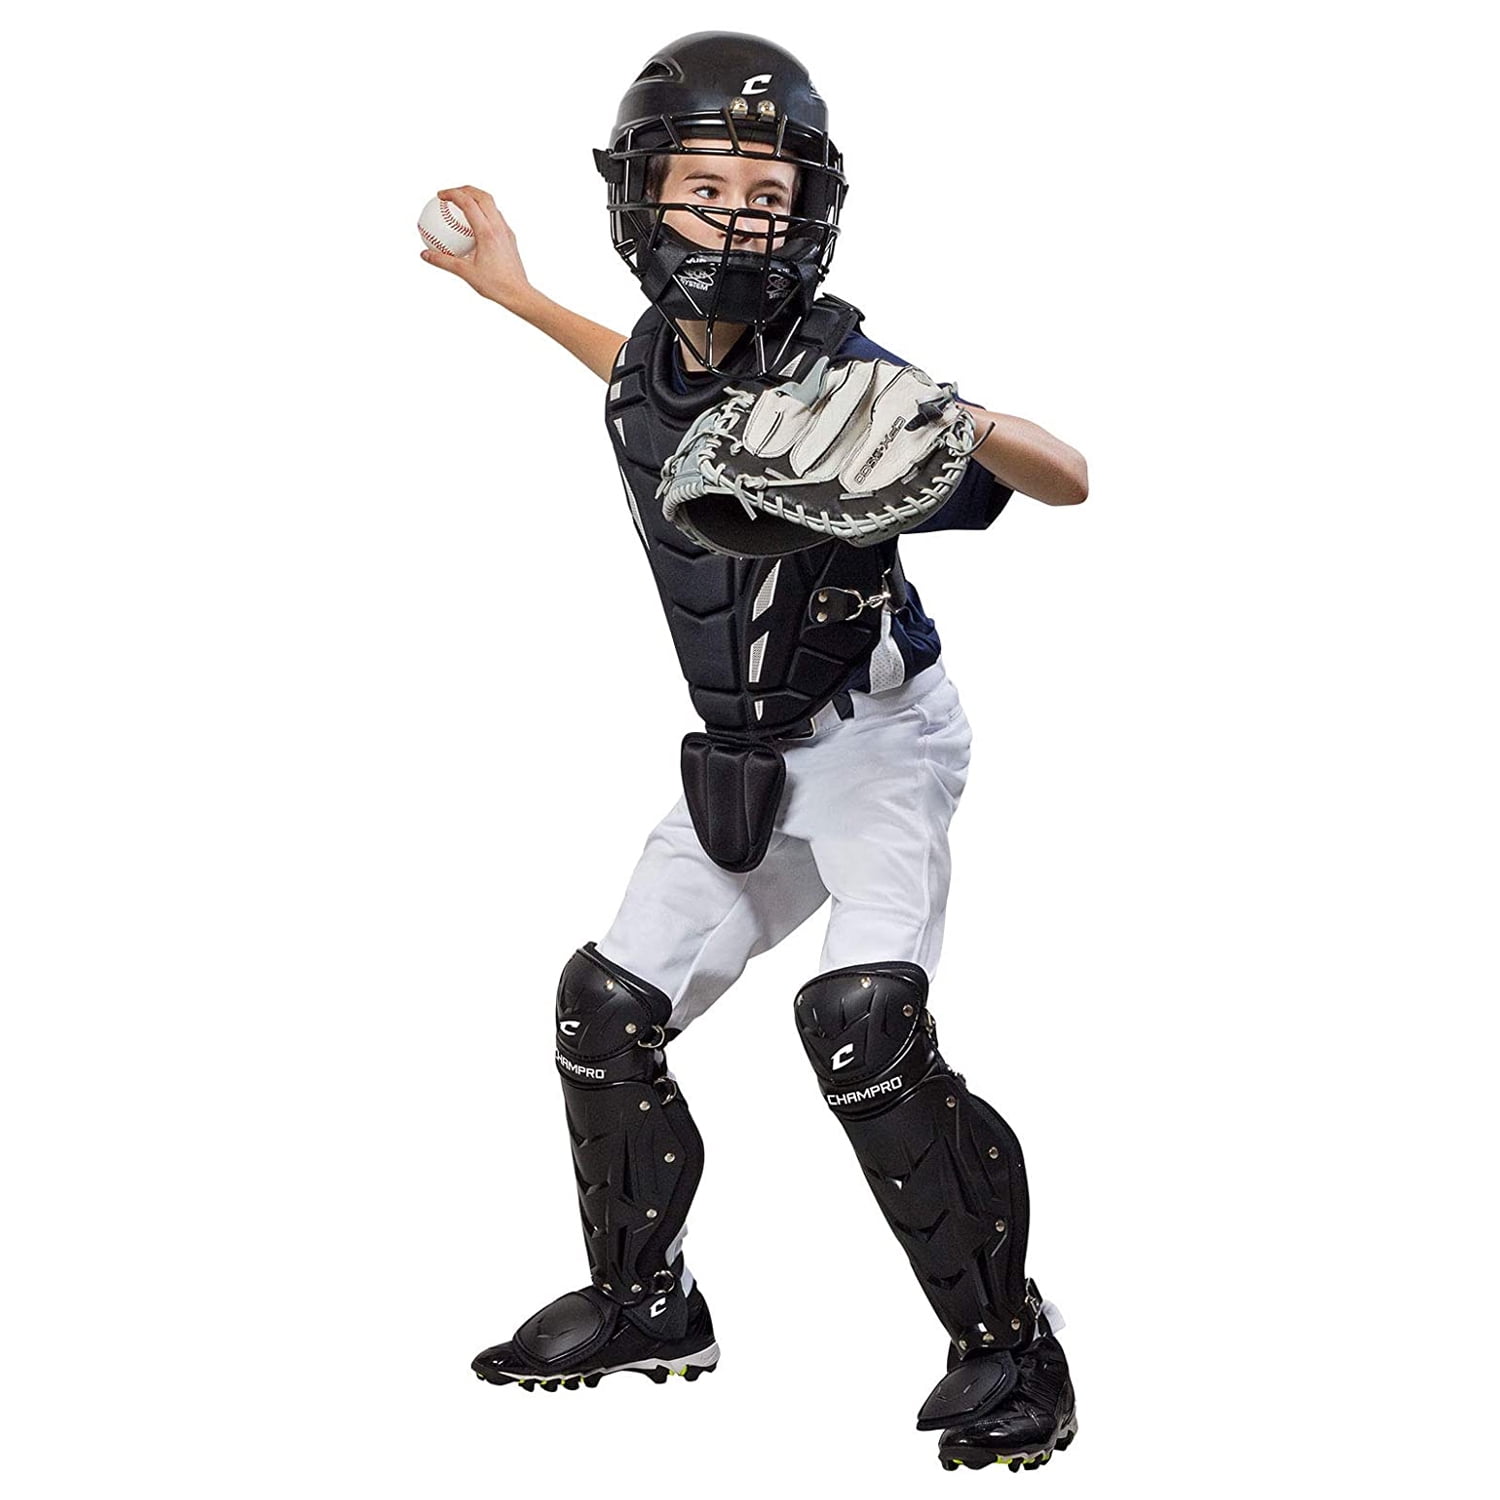 Champro Helmax Youth Flexible Catchers Protective Equipment Lightweight Gear Set 